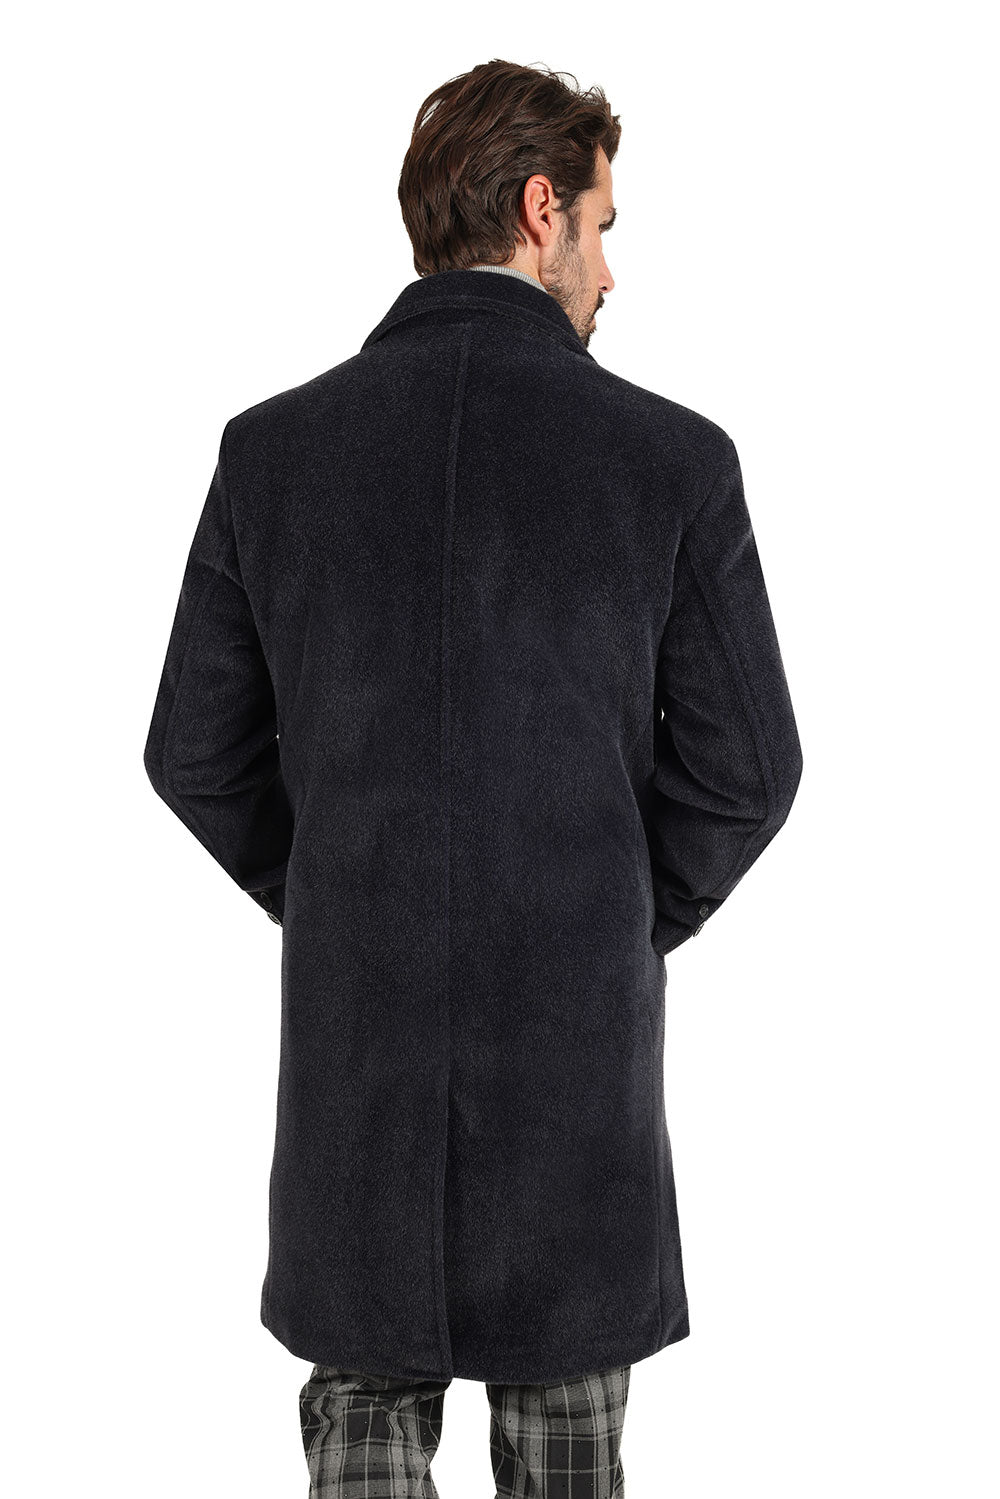 Barabas Men's Solid Color Luxury Collared Over Coat Jacket 2JLW01 Charcoal